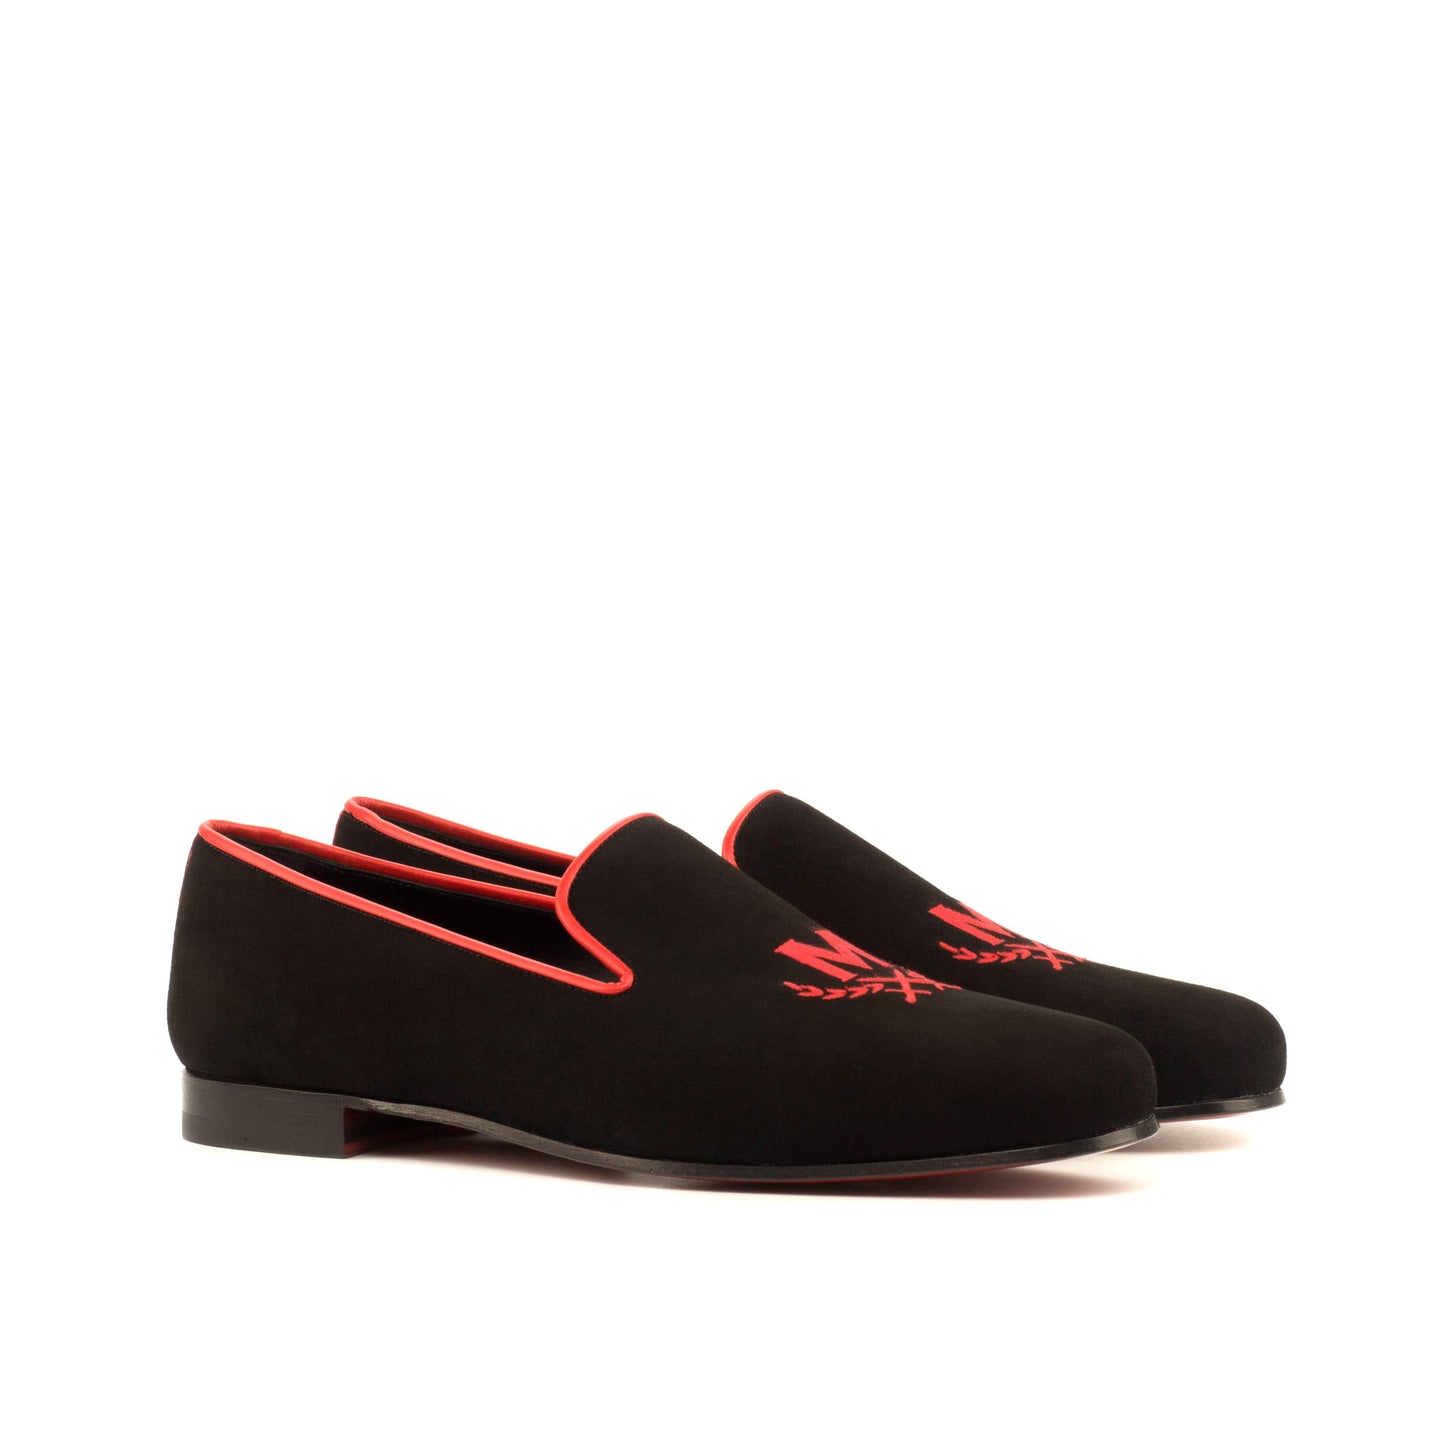 
                  
                    Amir - Mandeaux Tuxedo Slippers Shoes Black Suede Red Trim Black Owned Anchorage Alaska
                  
                